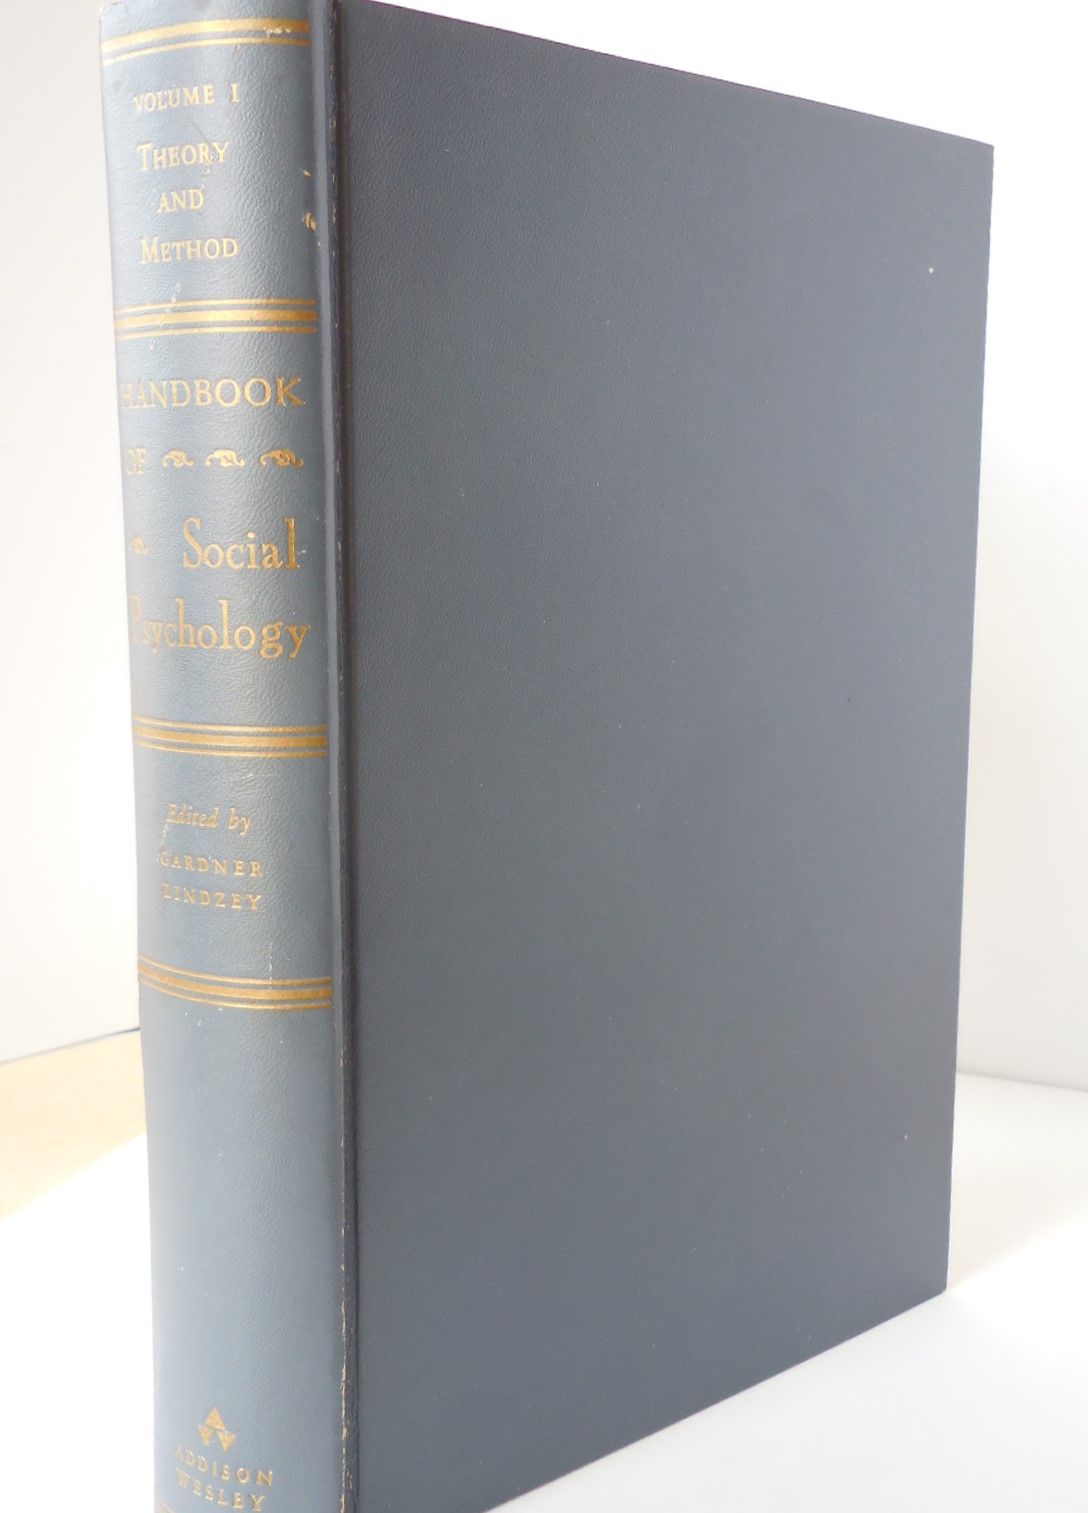 Handbook of Social Psychology, Volume I: Theory and Method - Lindzey, Gardner [Ed.]